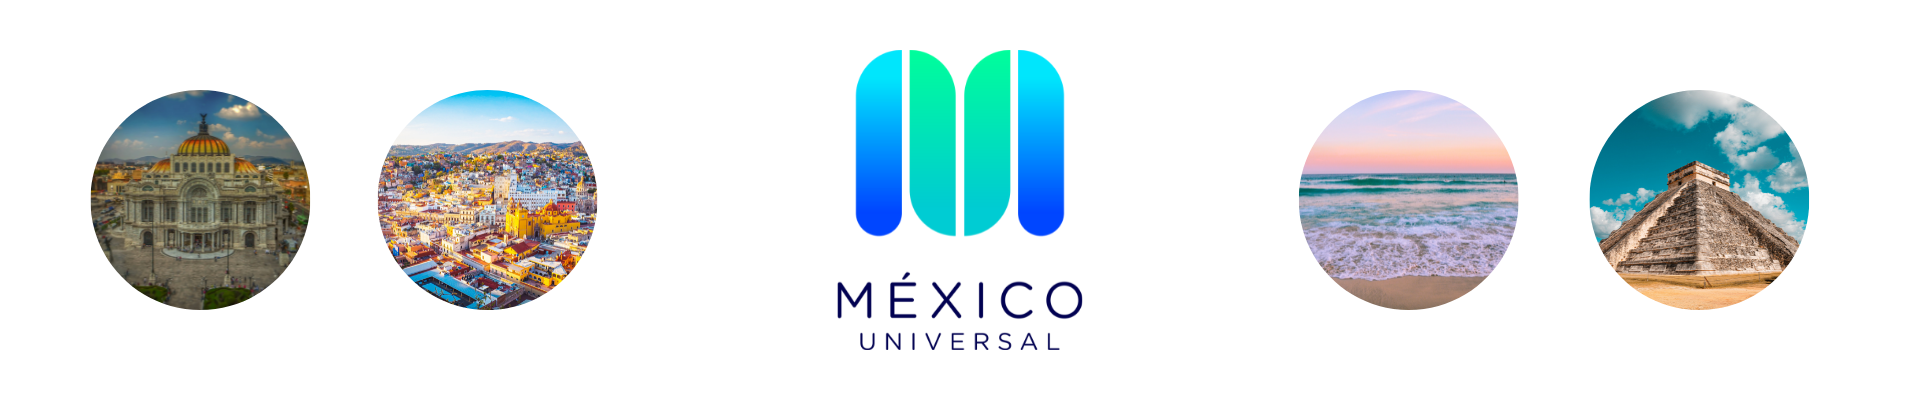 México Universal